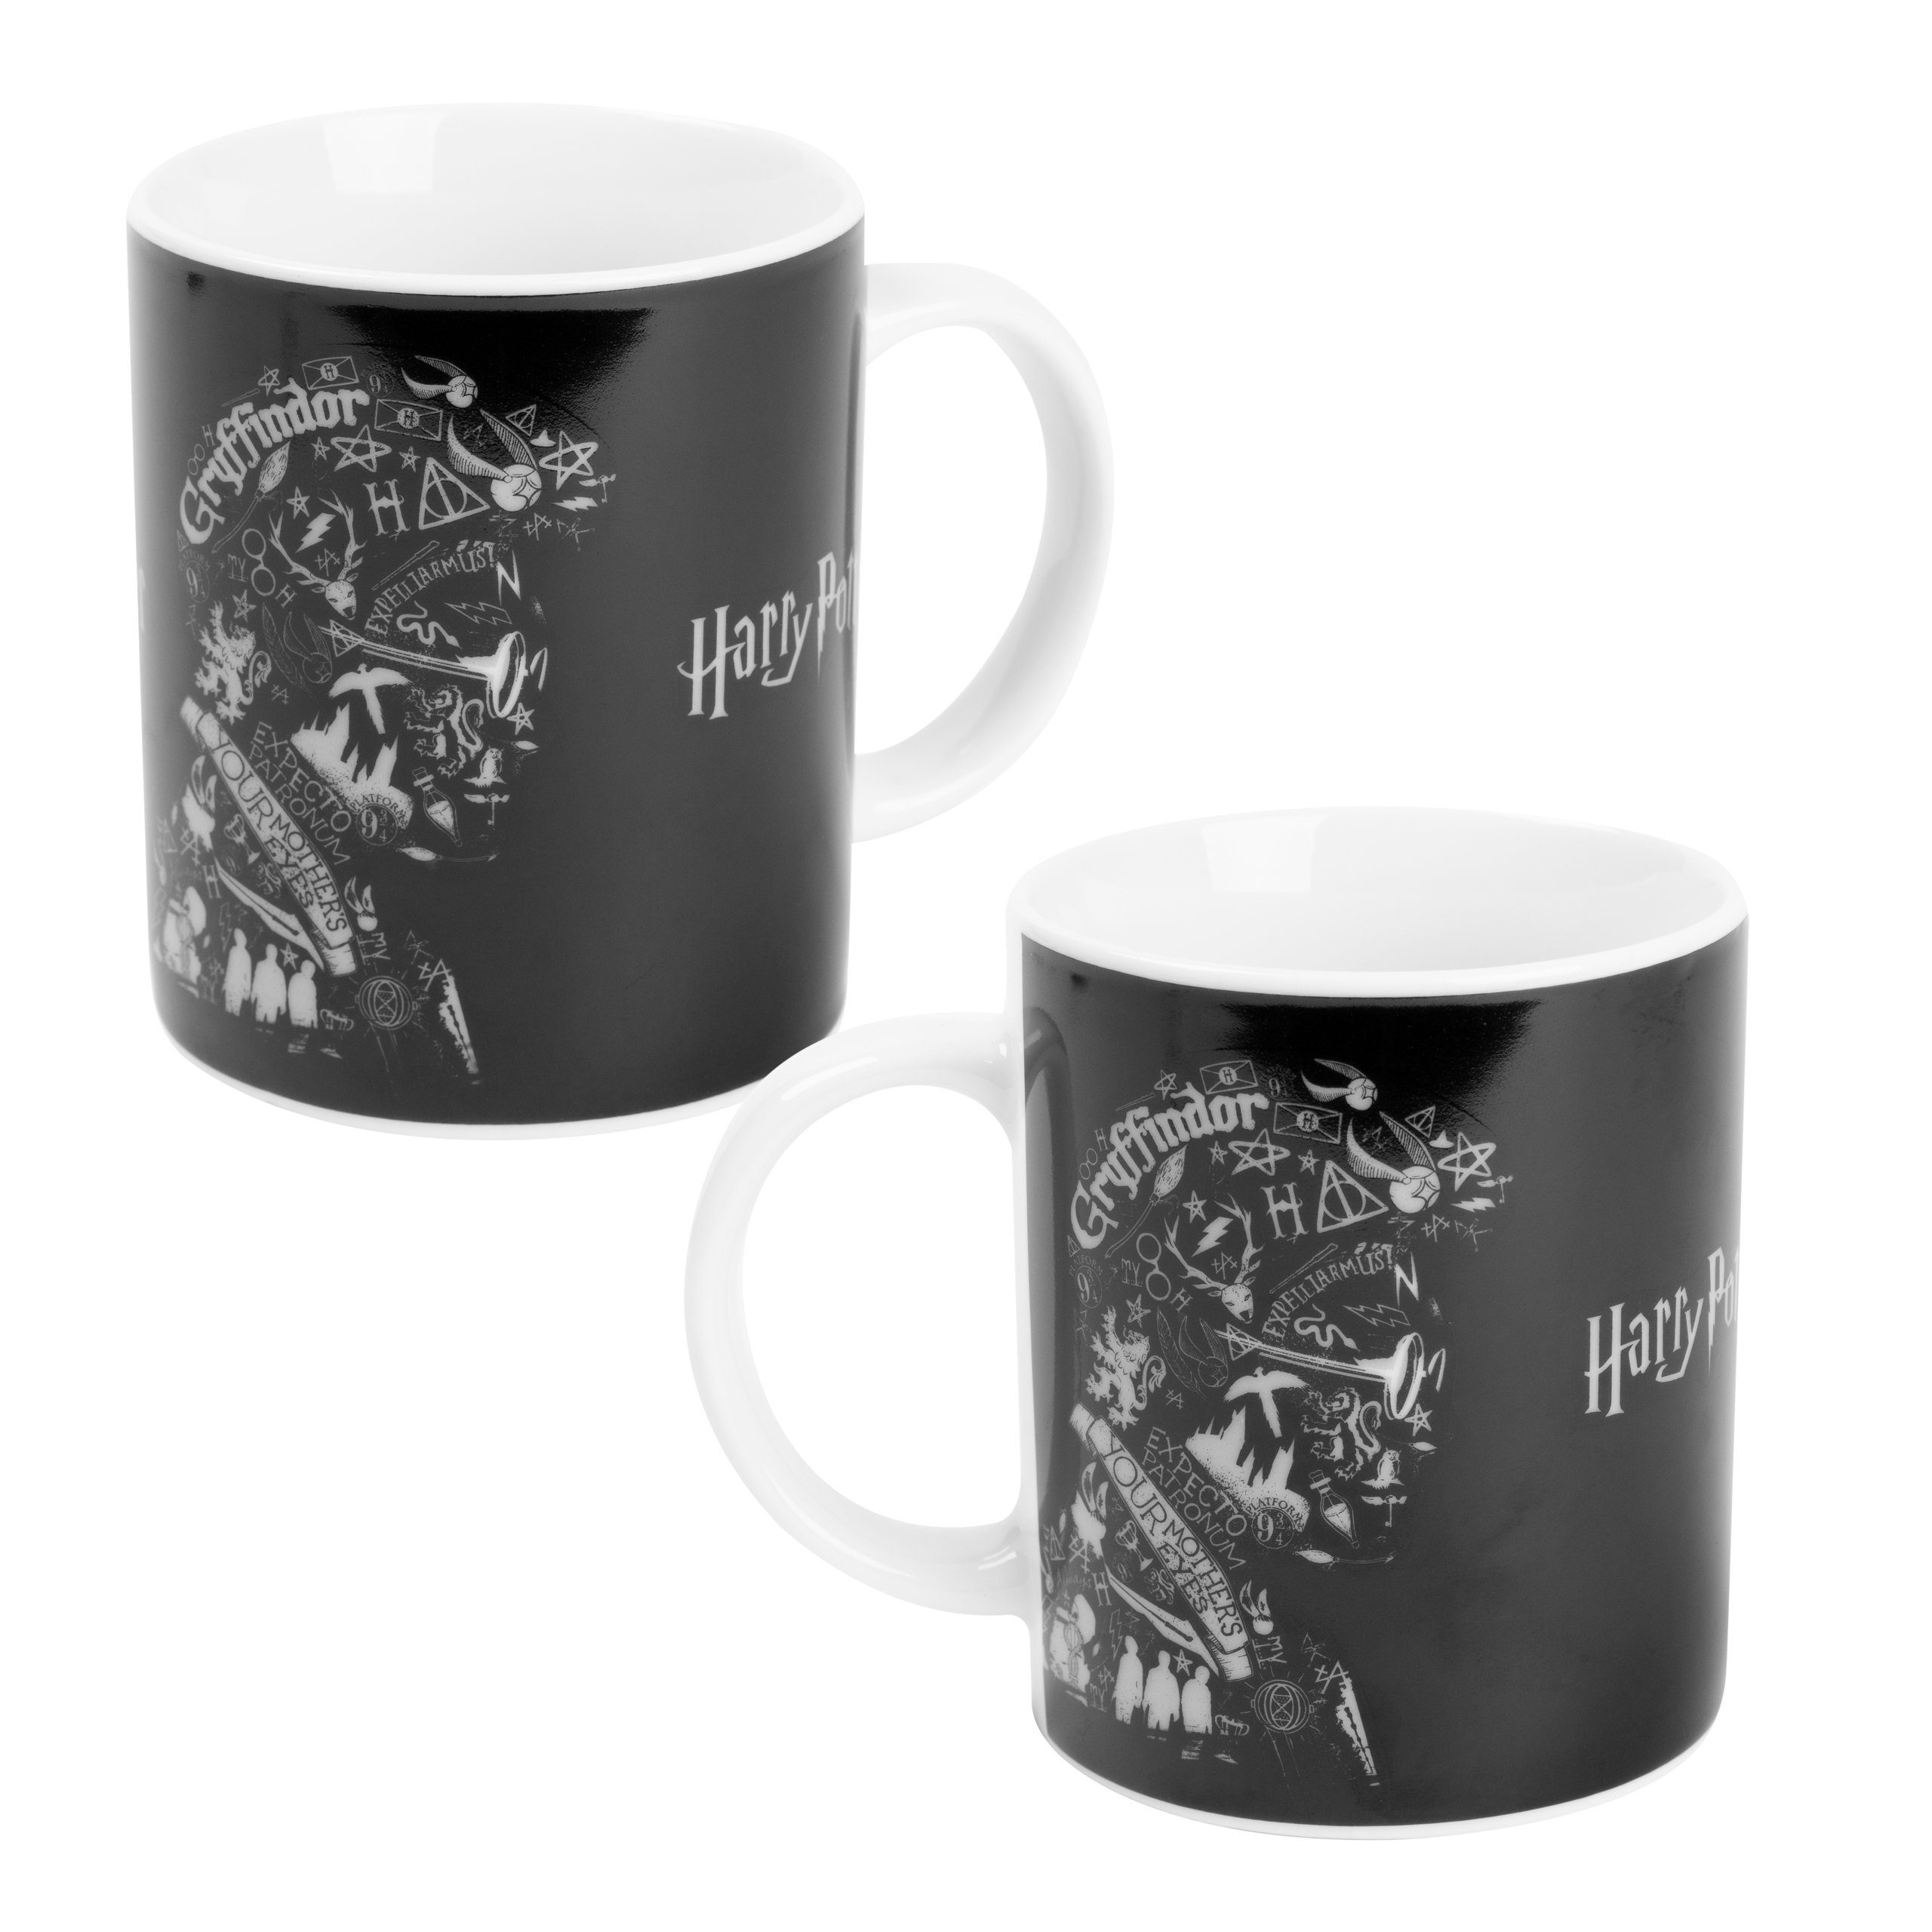 United Labels® Tasse Harry Potter Tasse - Silhouette Kaffeetasse aus Porzellan 320 ml, Porzellan | Tassen